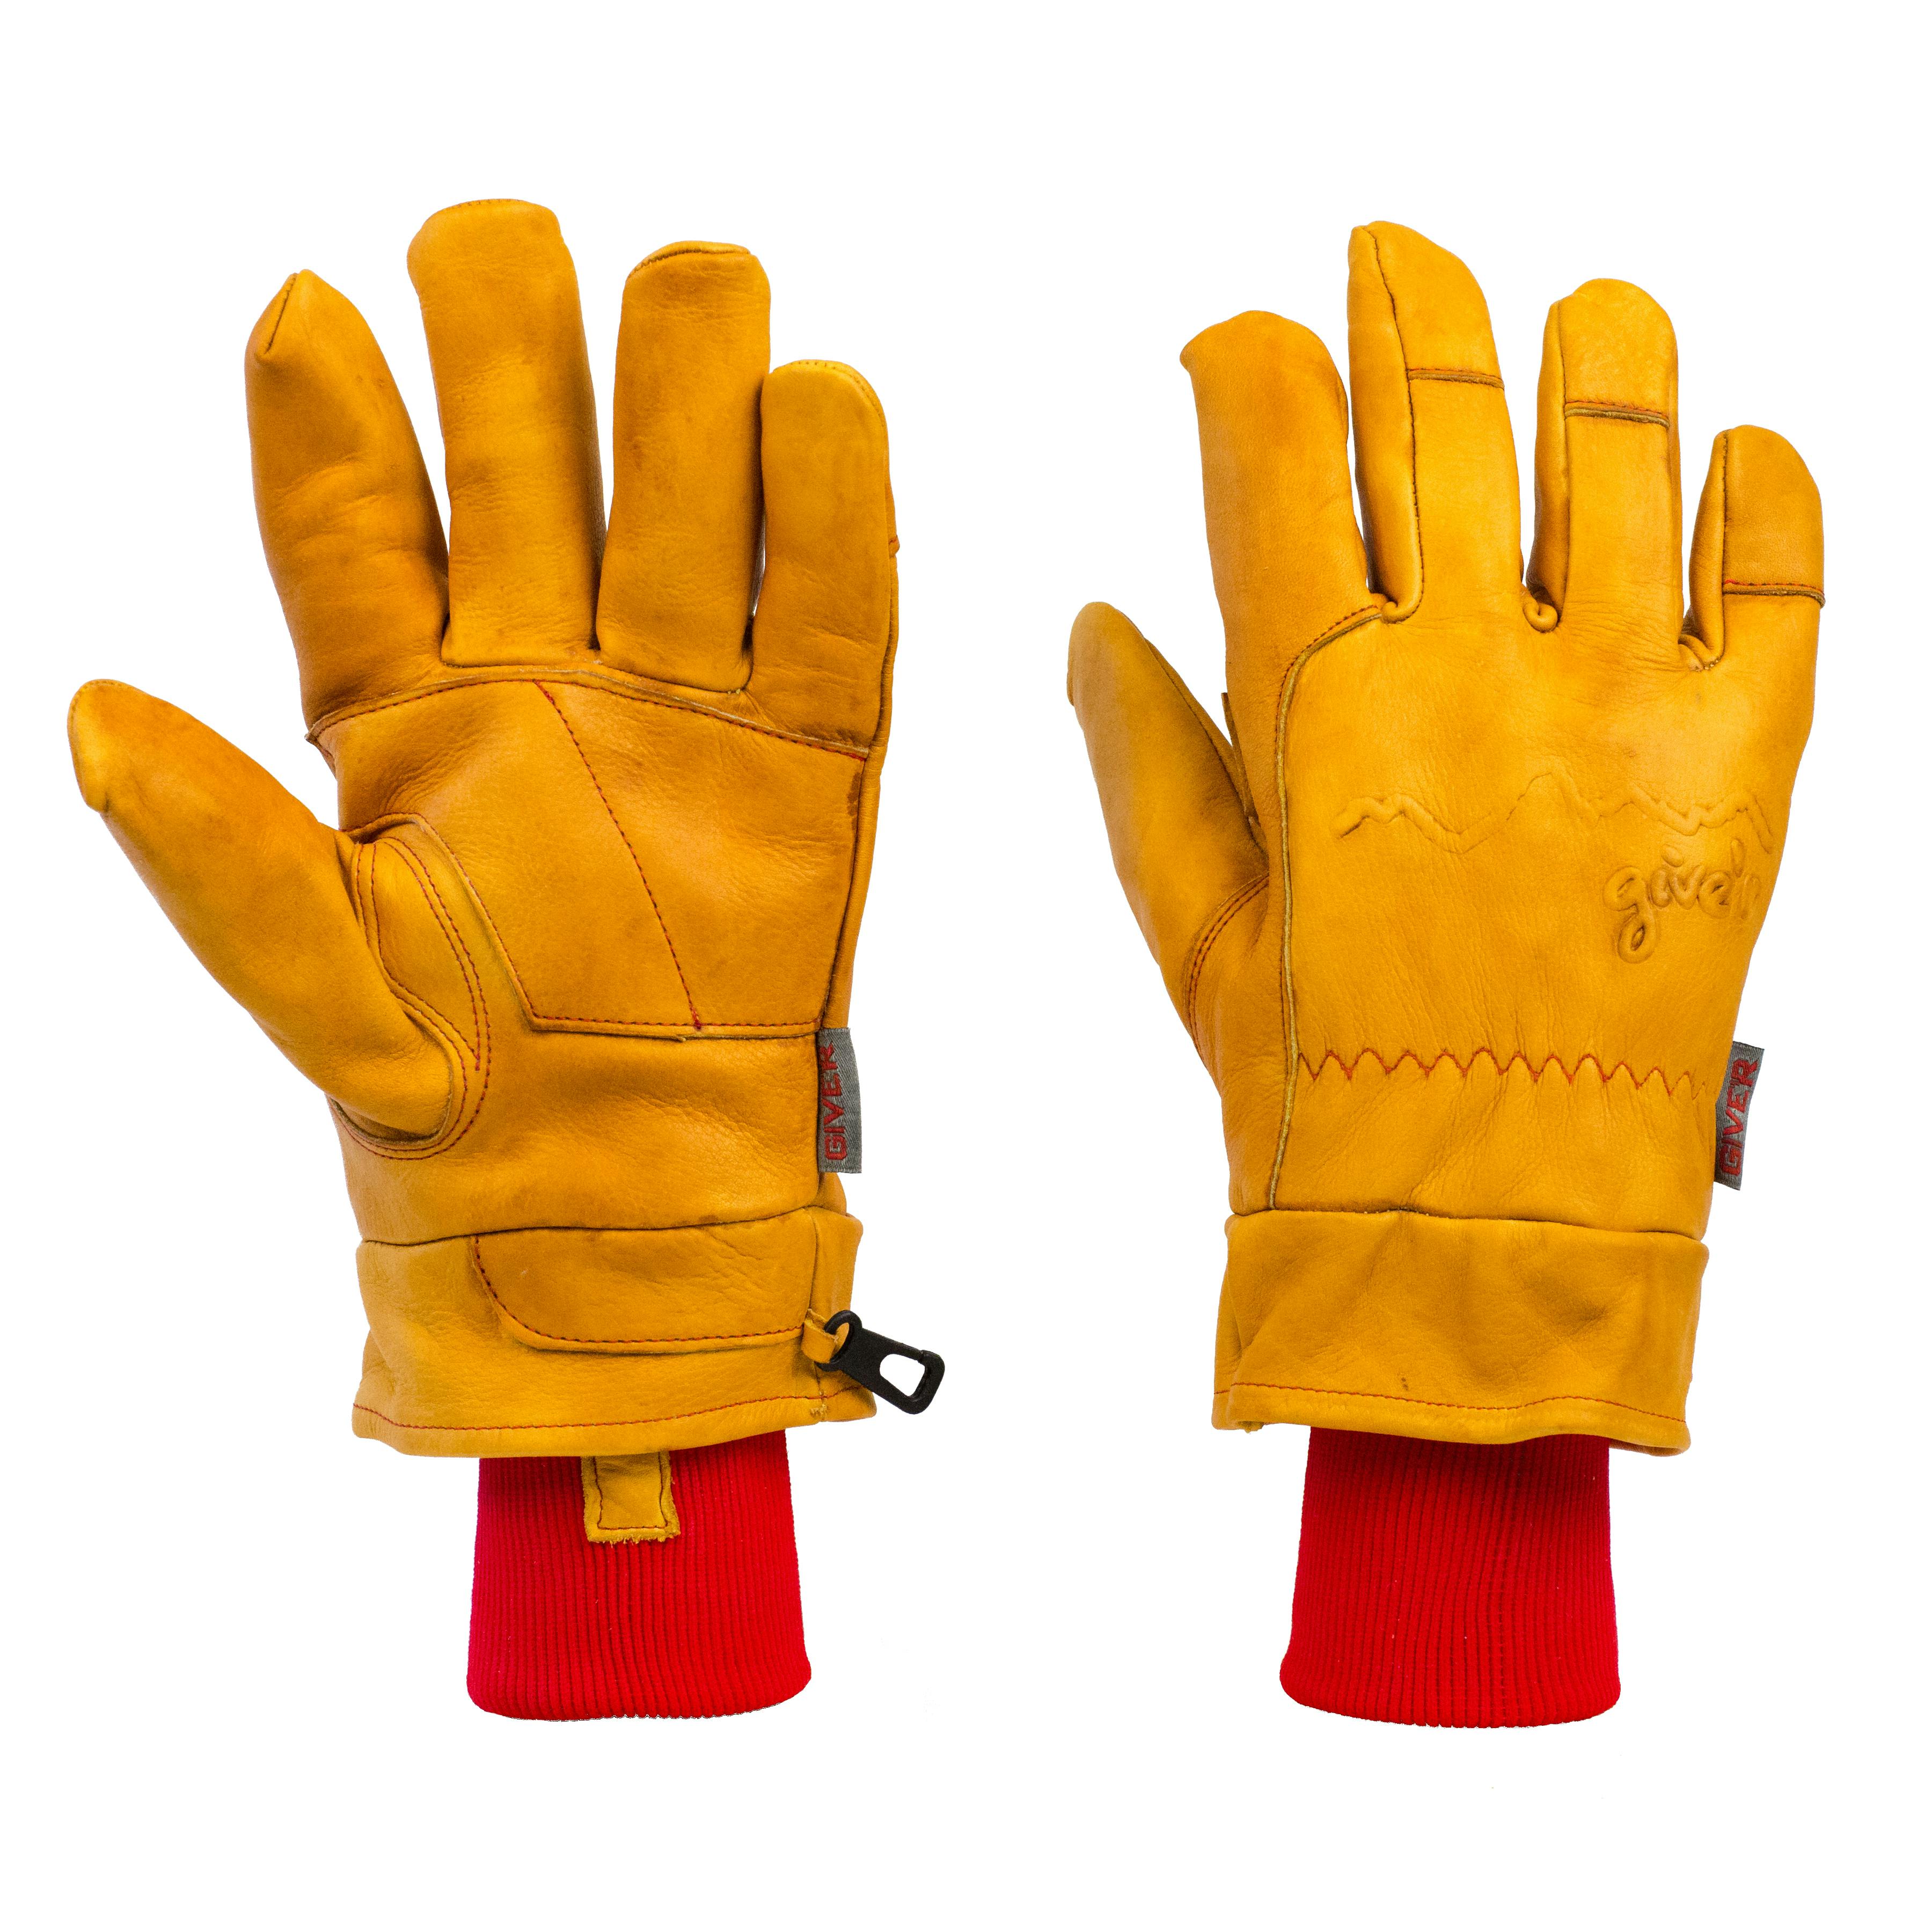 Give'r 4 Season Glove w/ Wax Coating